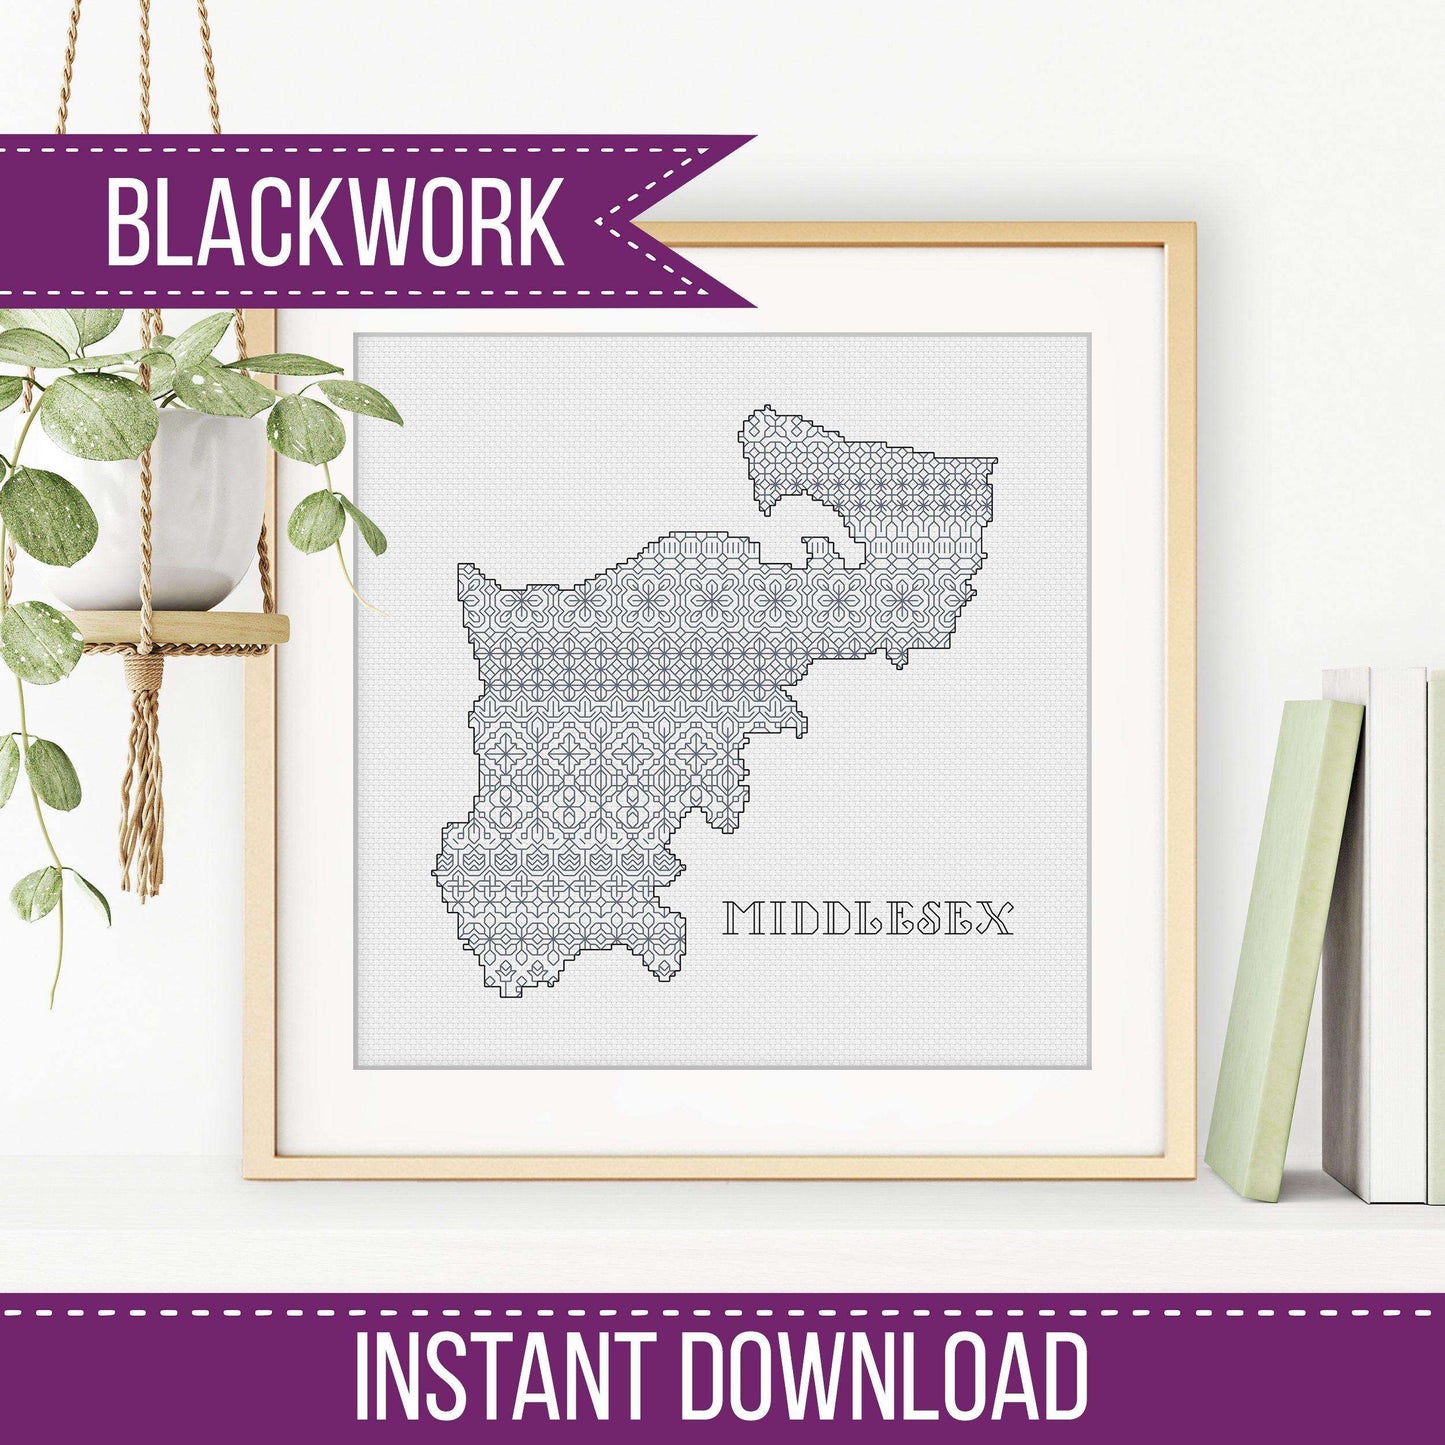 Middlesex Blackwork Pattern - Blackwork Patterns & Cross Stitch by Peppermint Purple